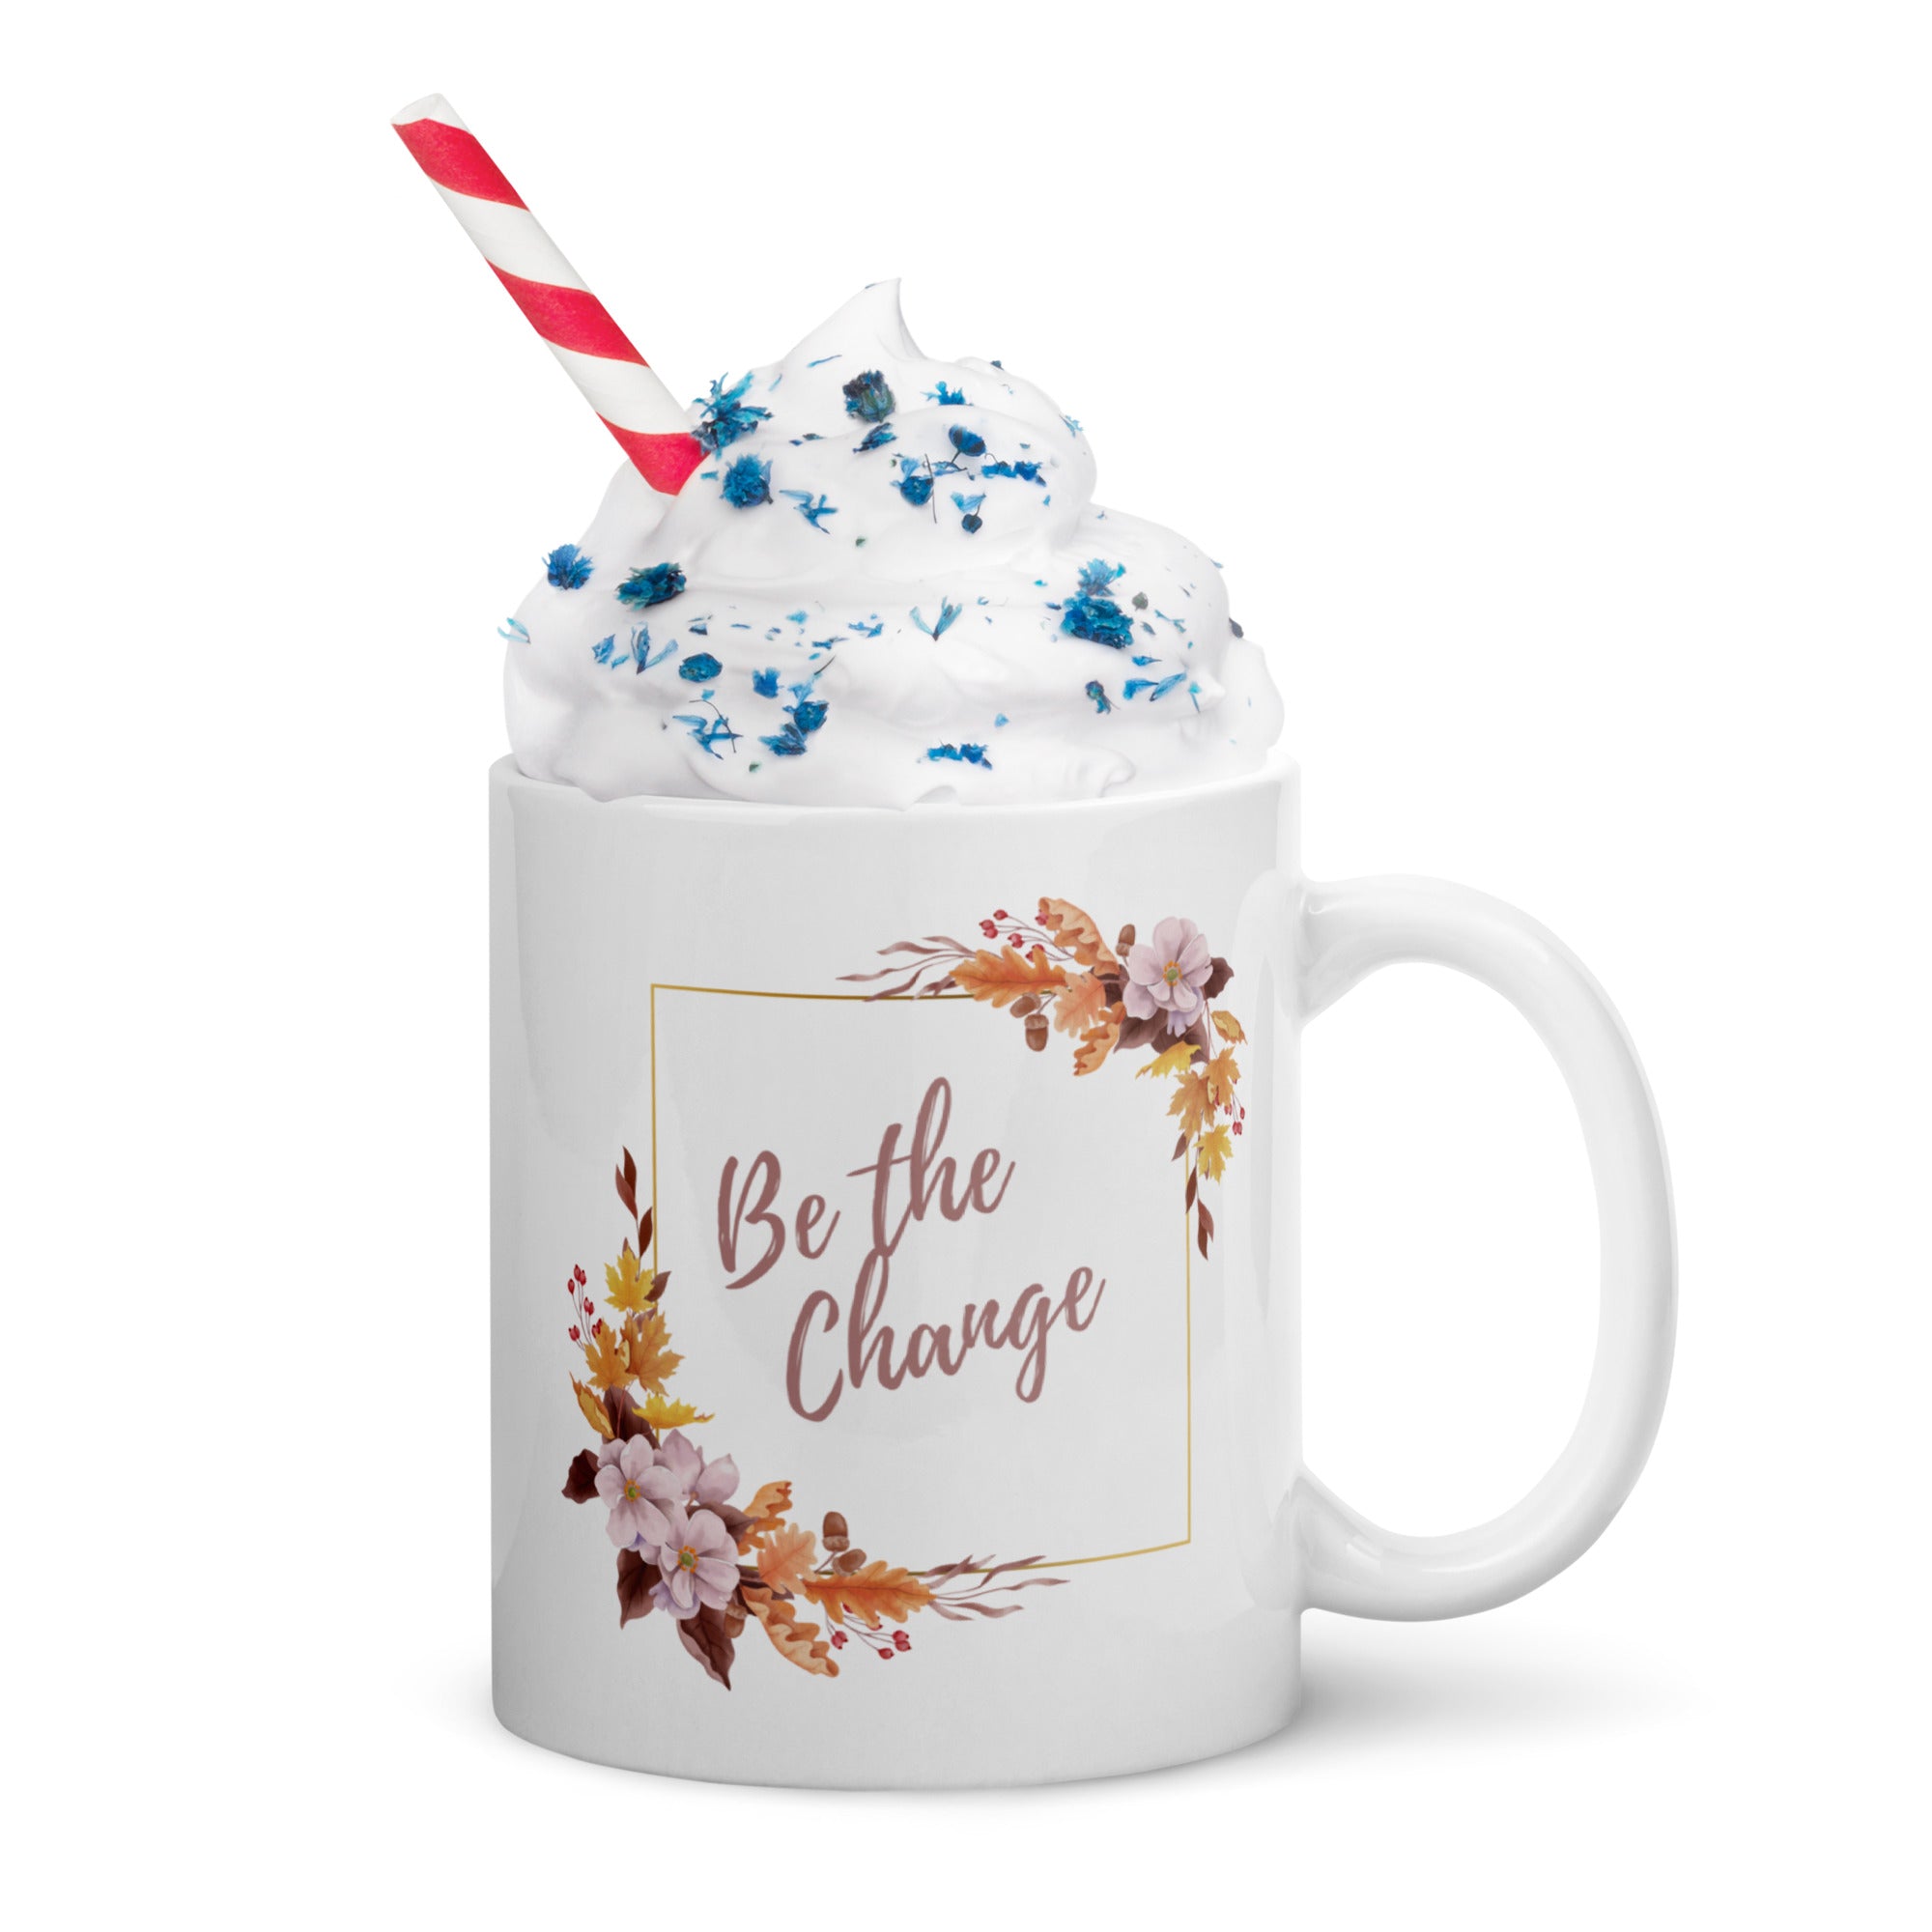 Be the Change - White glossy mug